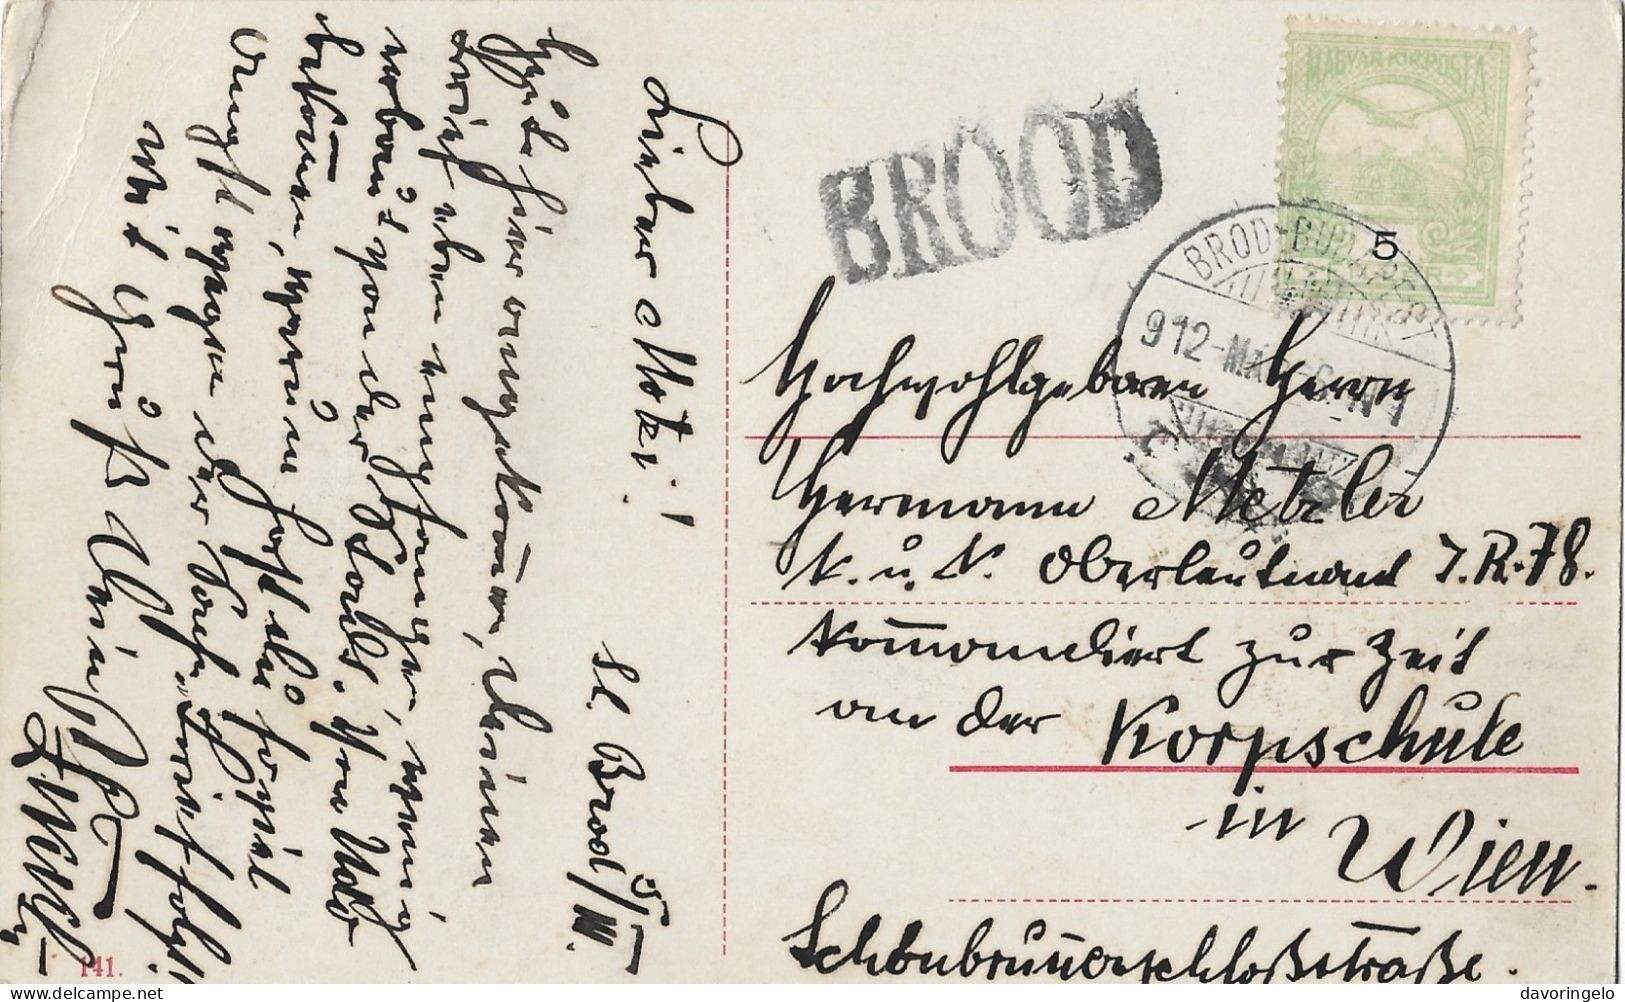 Bosnia-Herzegovina/Austria-Hungary/Croatia, Picture Postcard-year 1912, Rare Cancel "BROOD" - Bosnien-Herzegowina